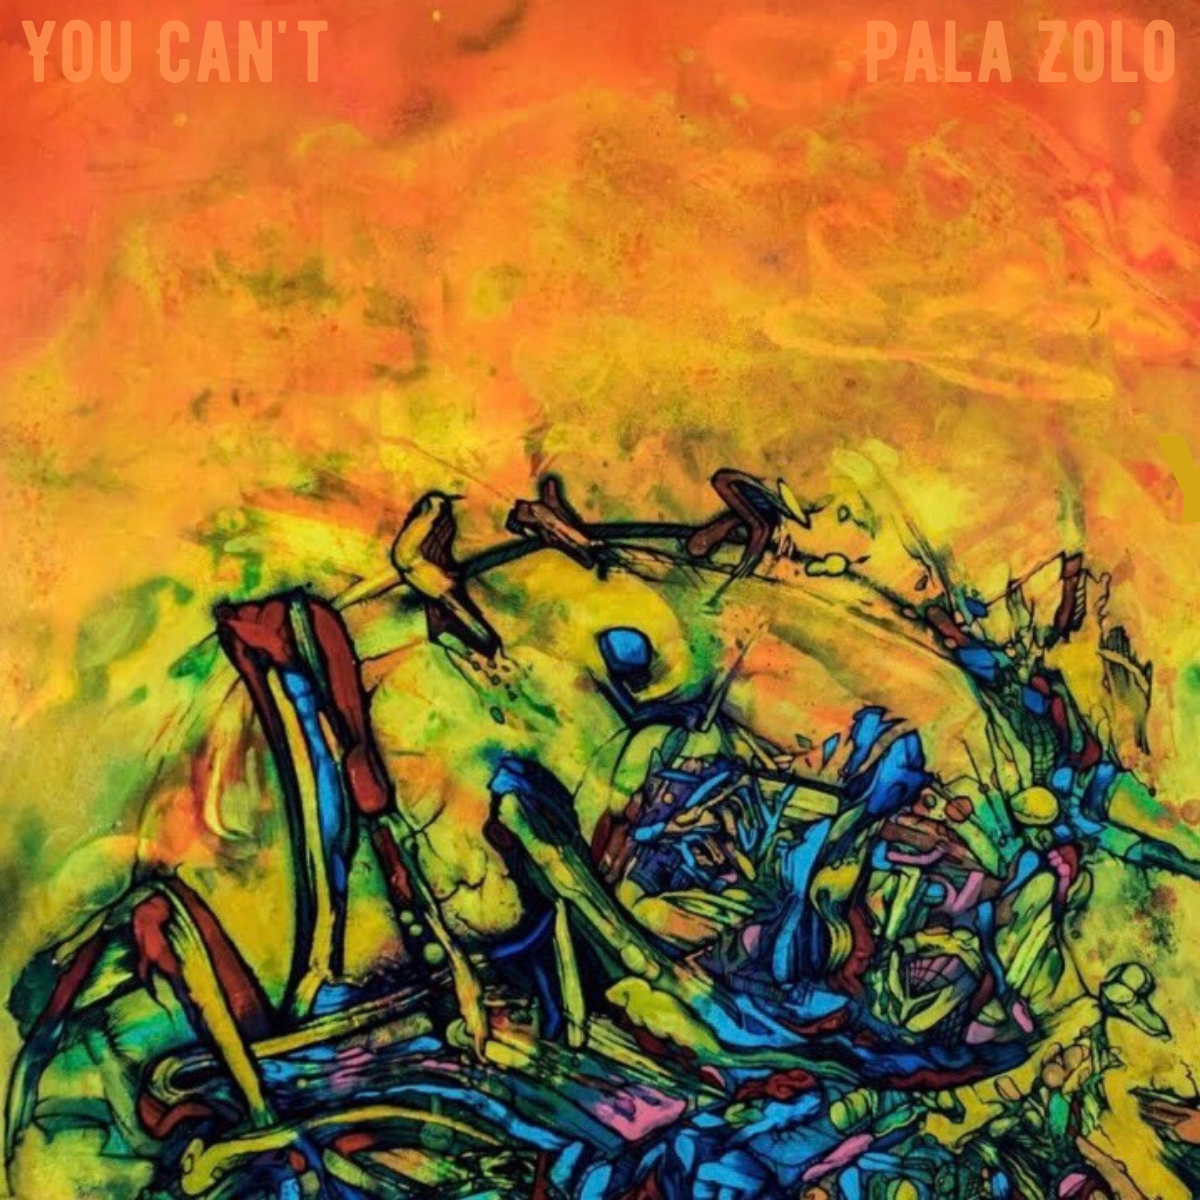 Pala Zolo - You Can't